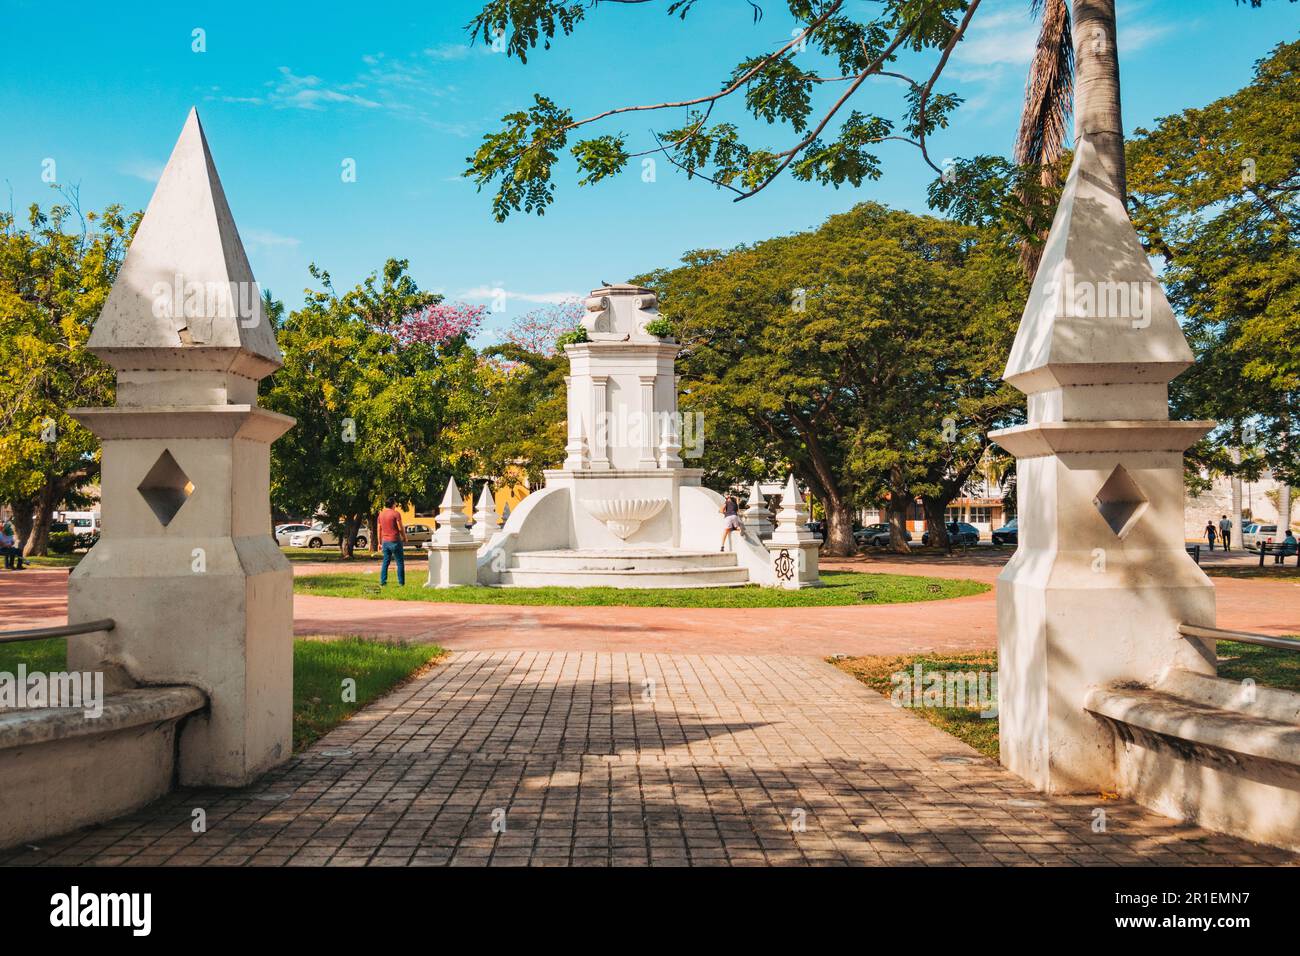 the entrance to Parque IV Centenario in the city of Campeche, Mexico Stock Photo